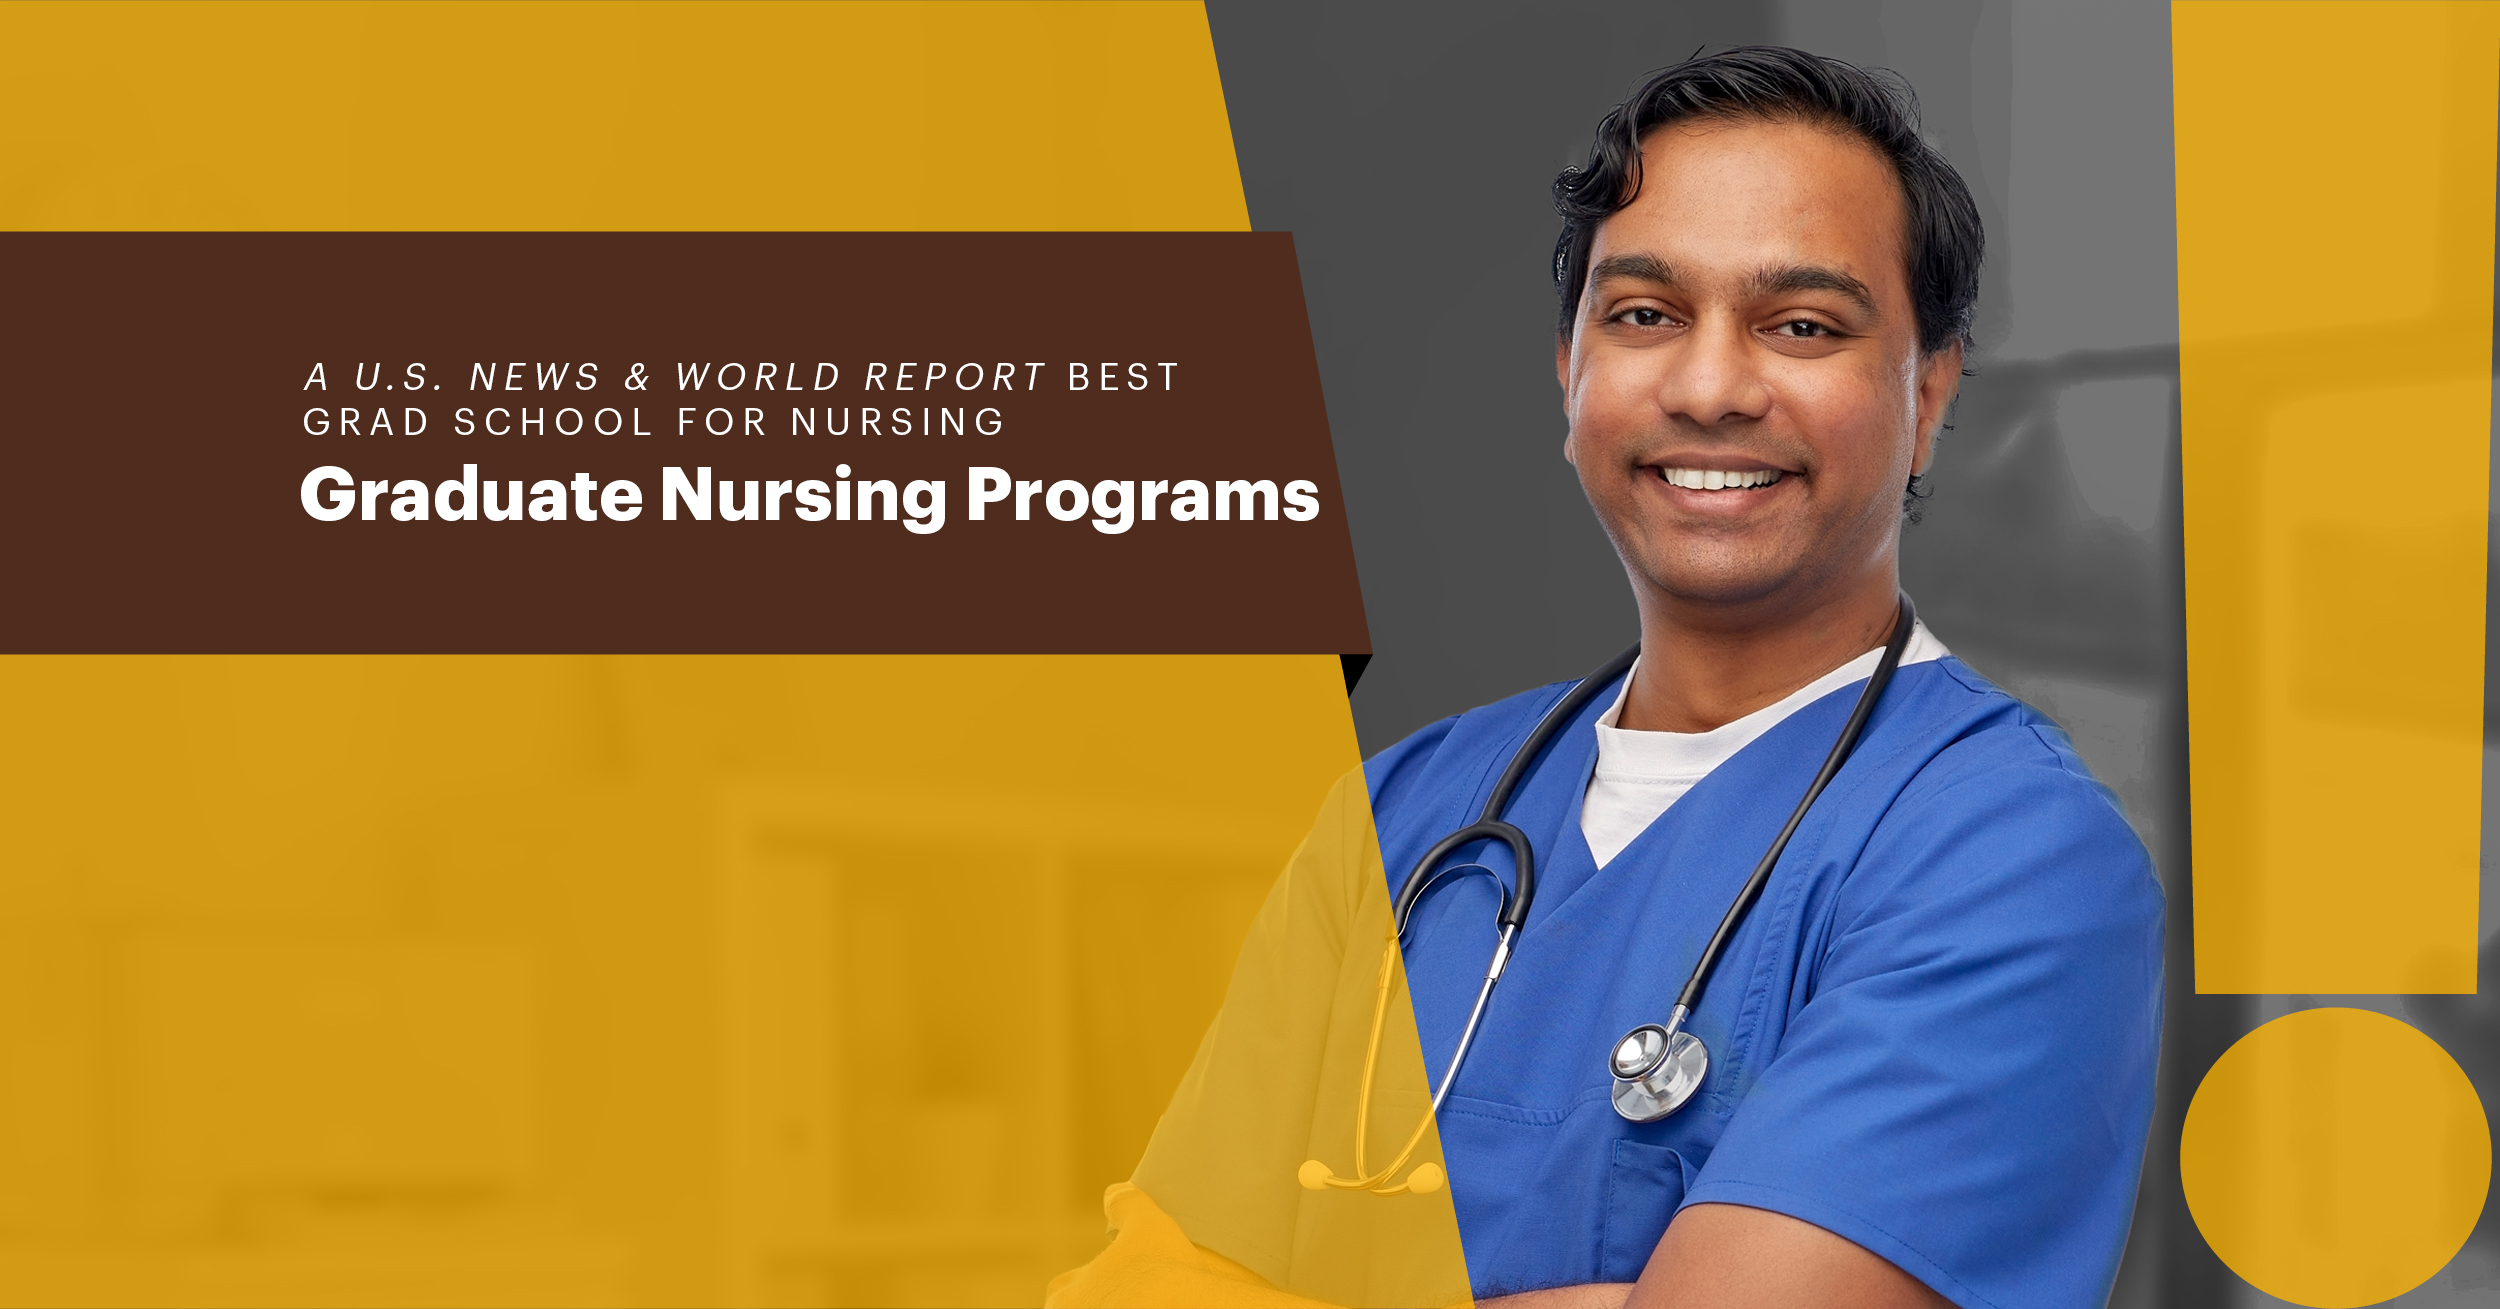 A U.S. News & World Report Grad school for Nursing Graduate Nursing Programs